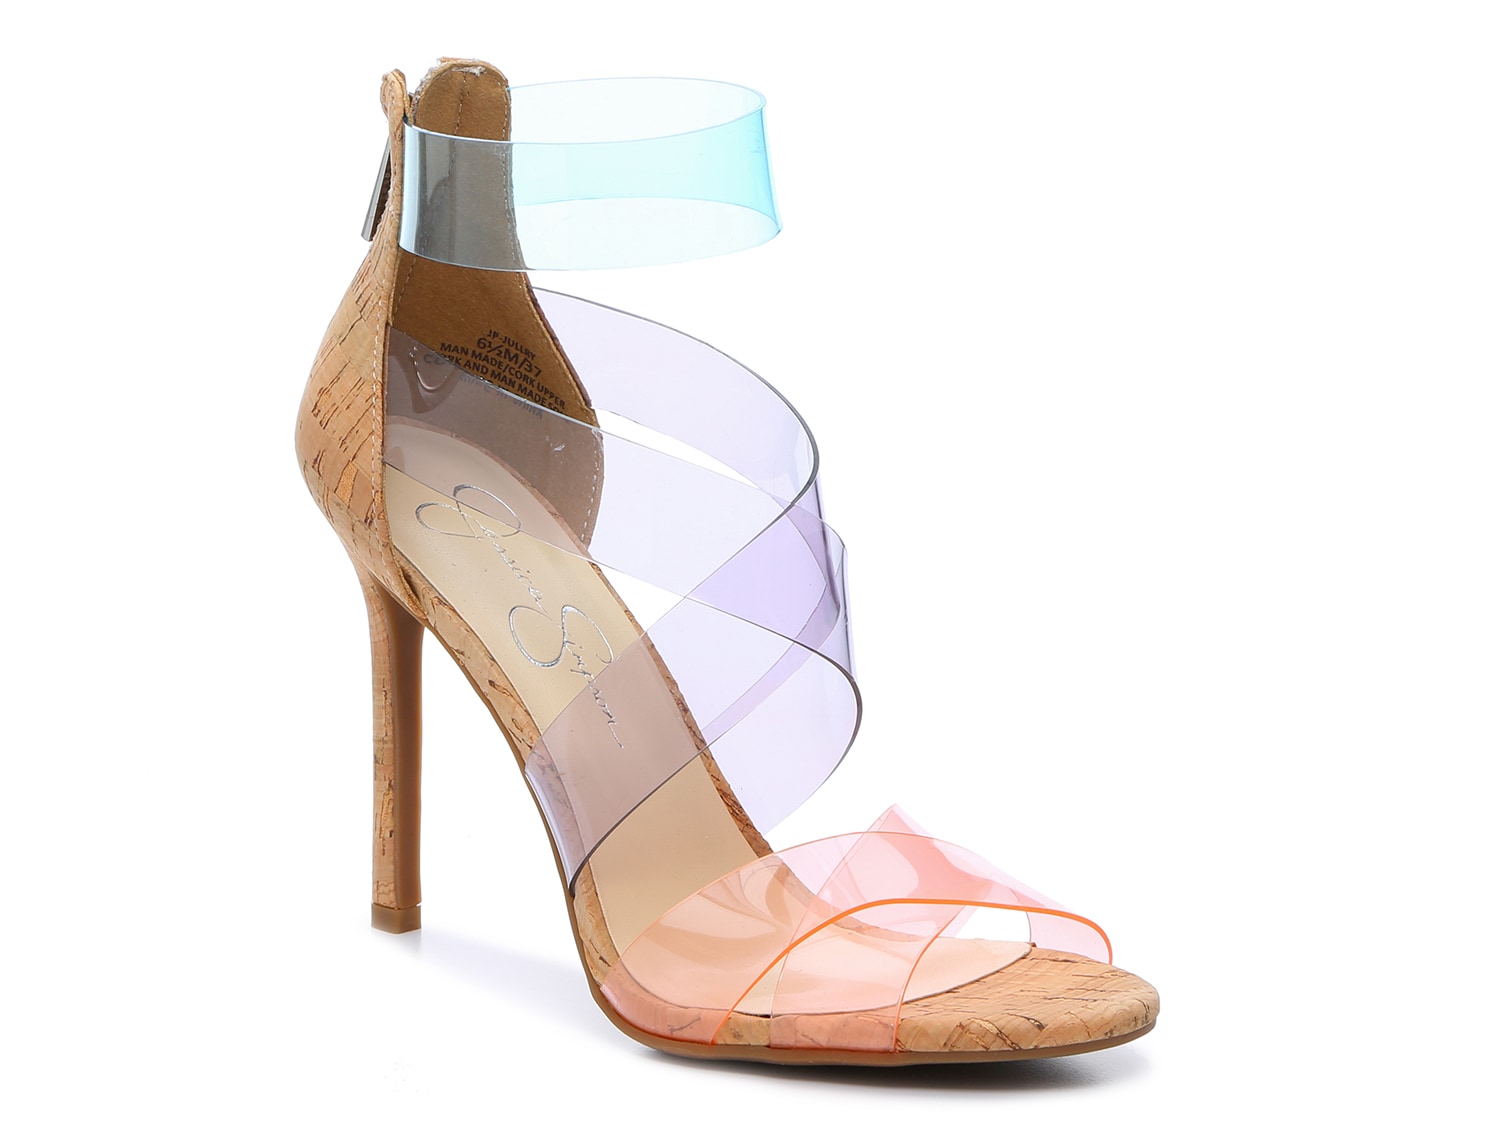 Jessica Simpson Boots Heels Wedges Sandals Dsw